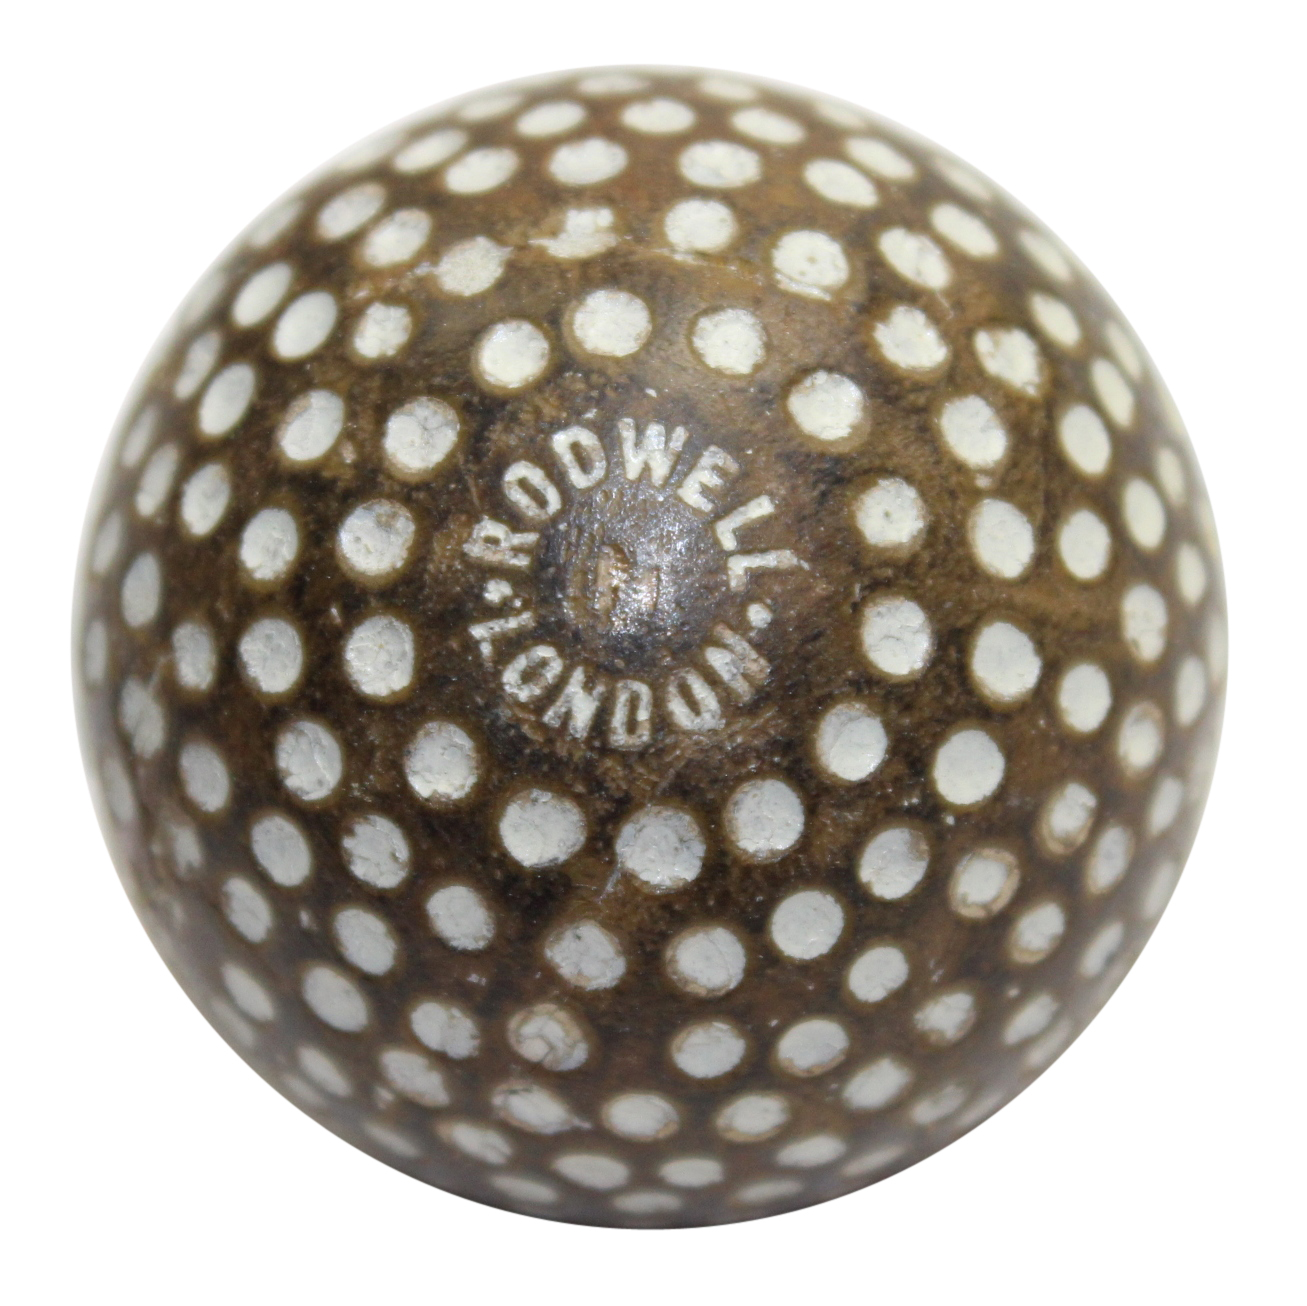 Vintage Golf Ball 72